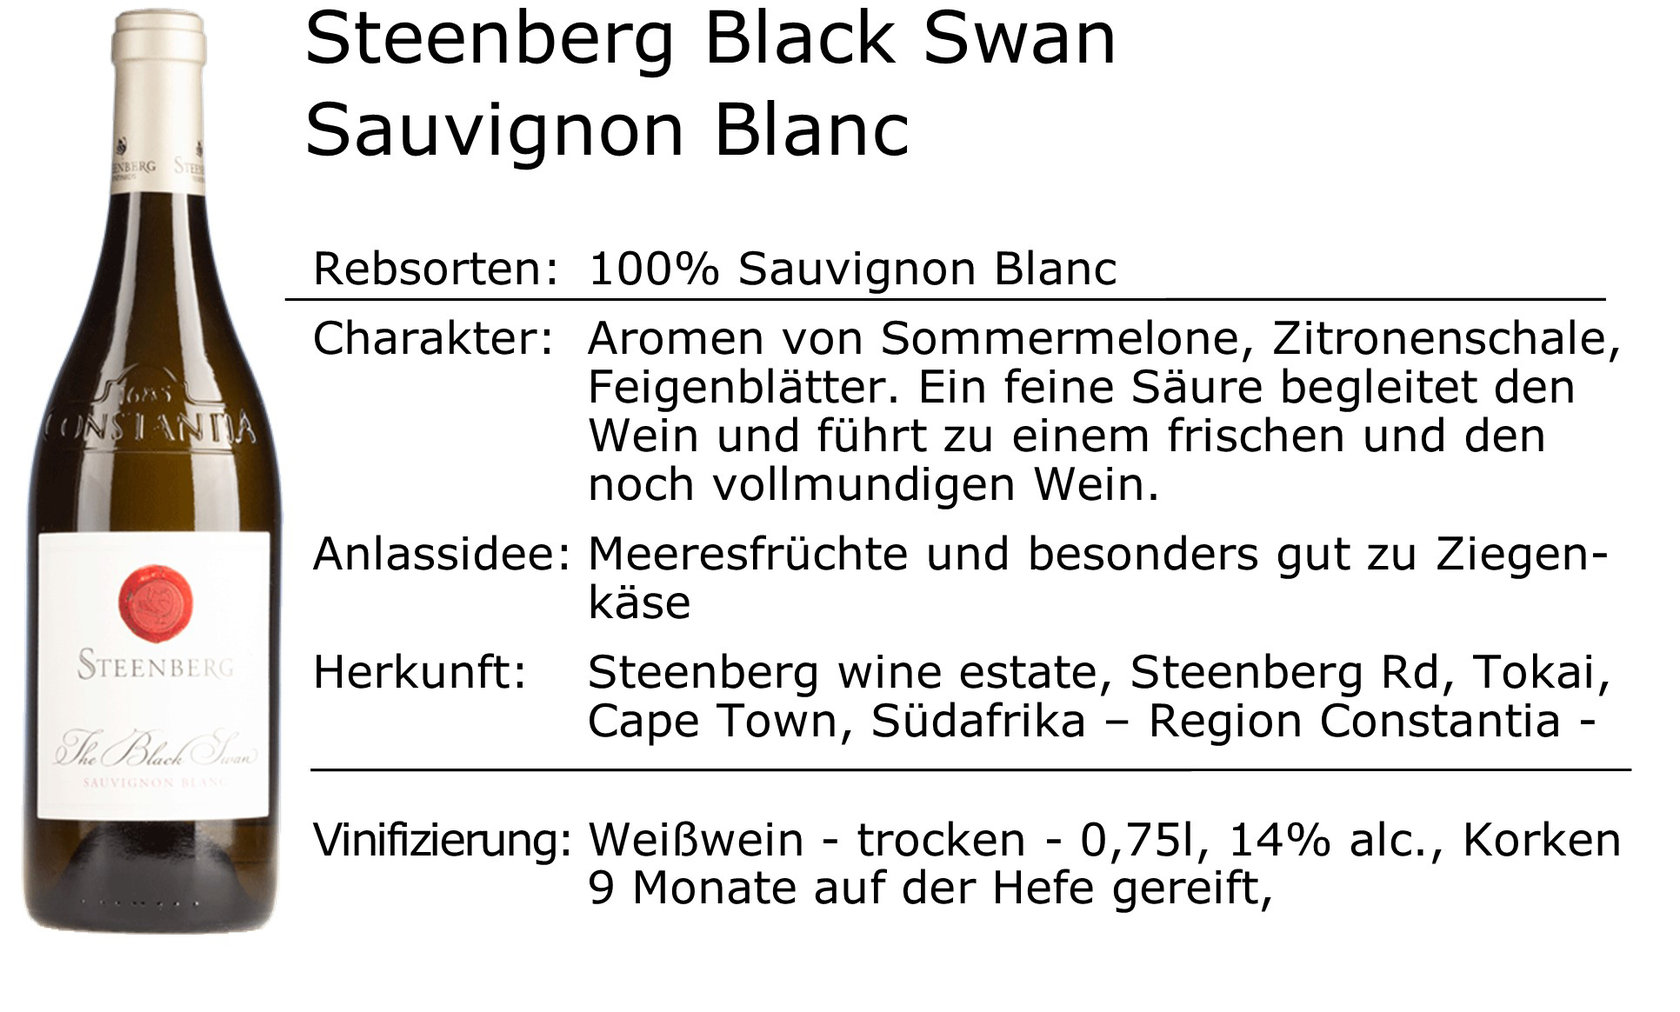 Steenberg Black Swan Sauvignon Blanc 2020